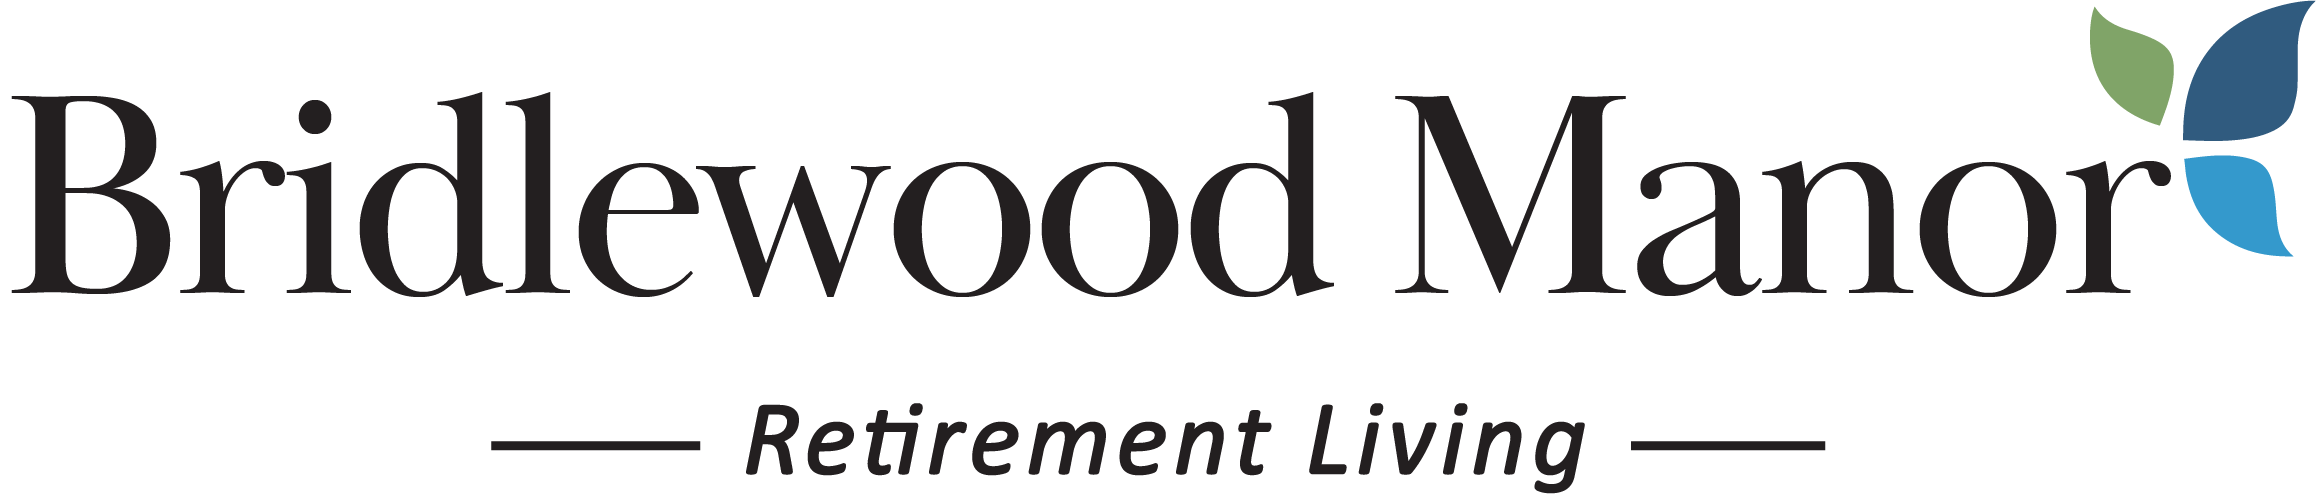 BridlewoodManor-Logo